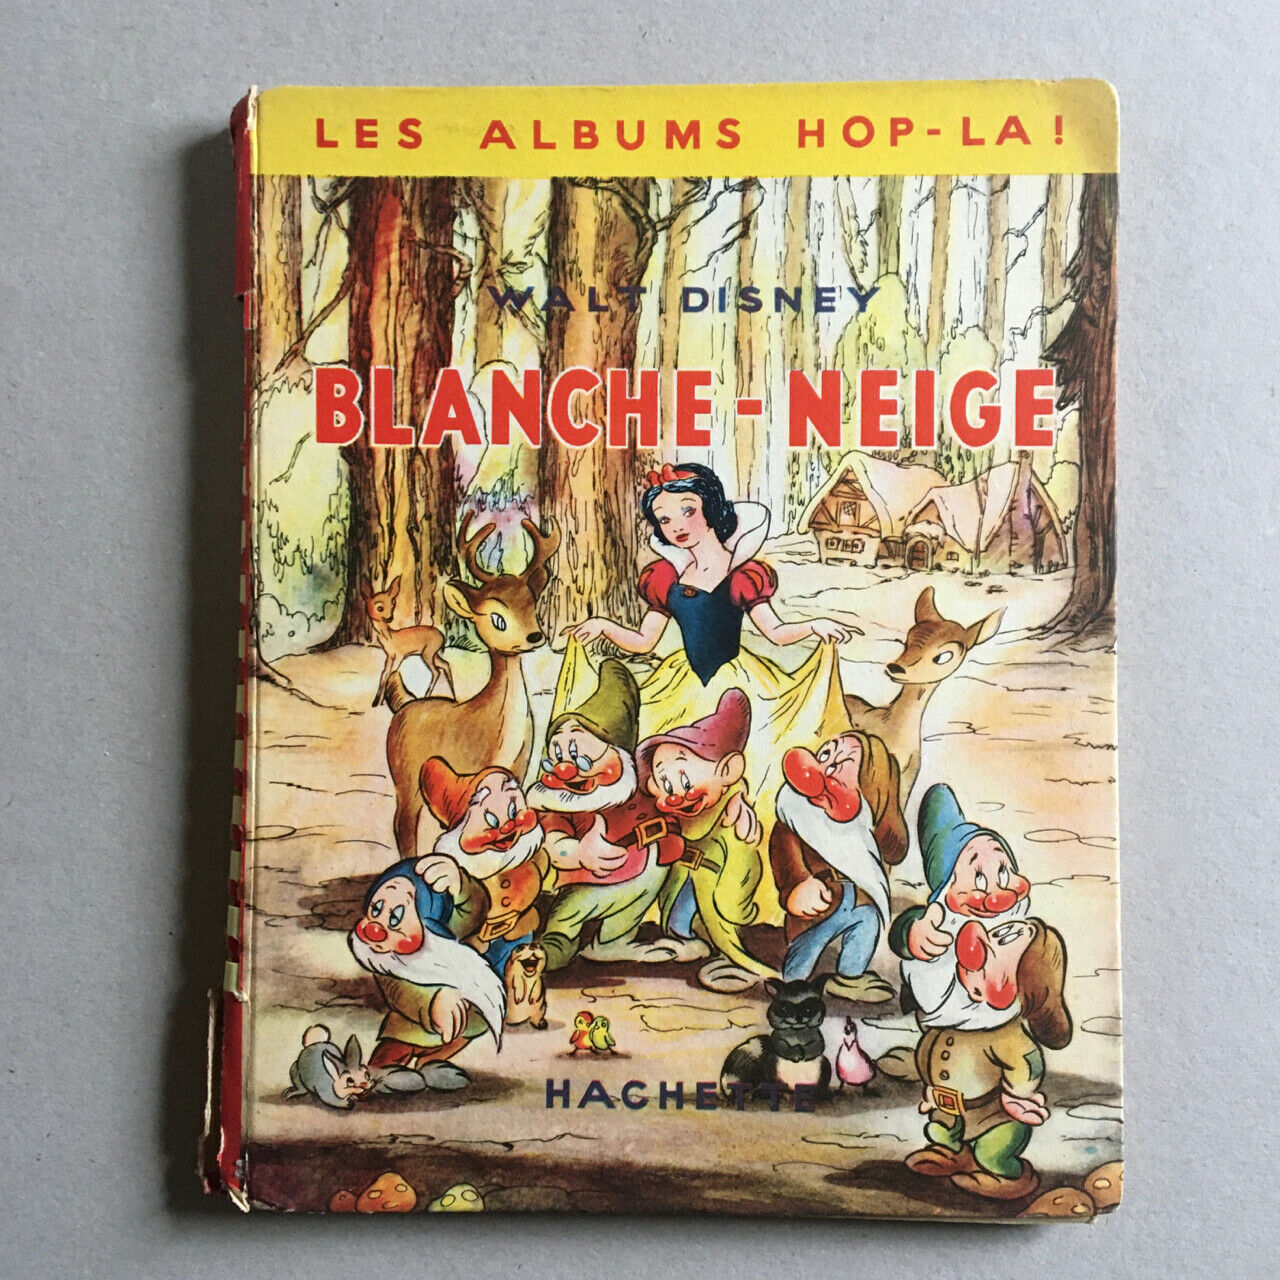 WALT DISNEY - Snow White - Album HOP-LA! - Hatchet - 1950.